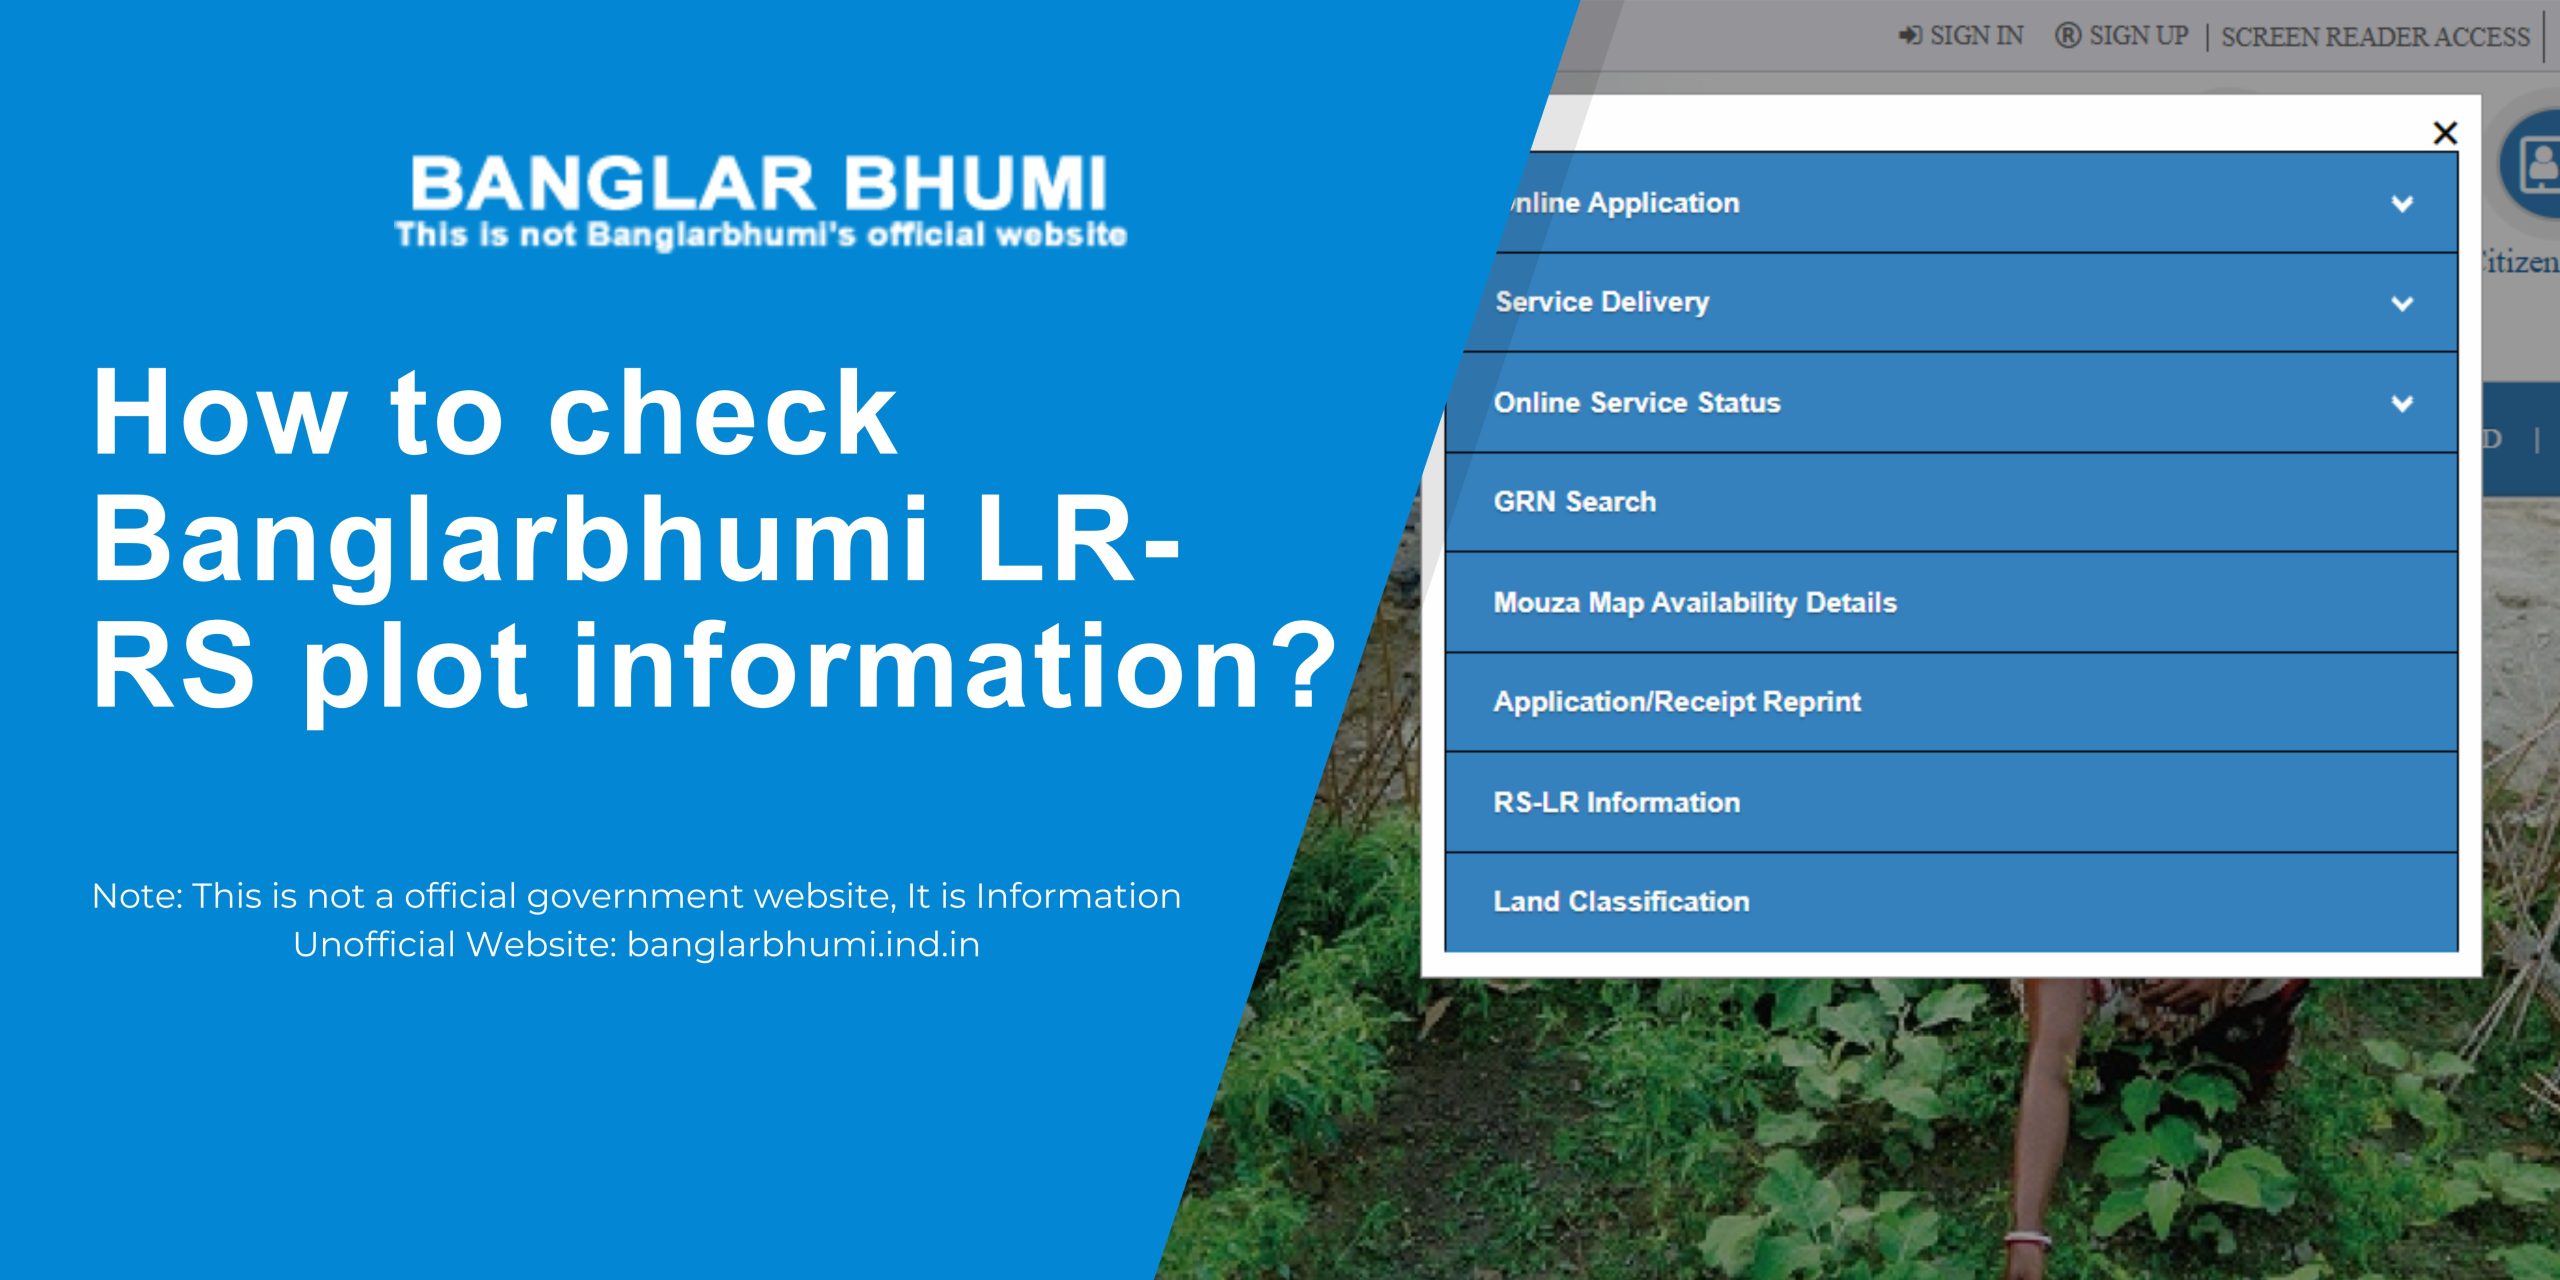 Banglarbhumi LR-RS plot information